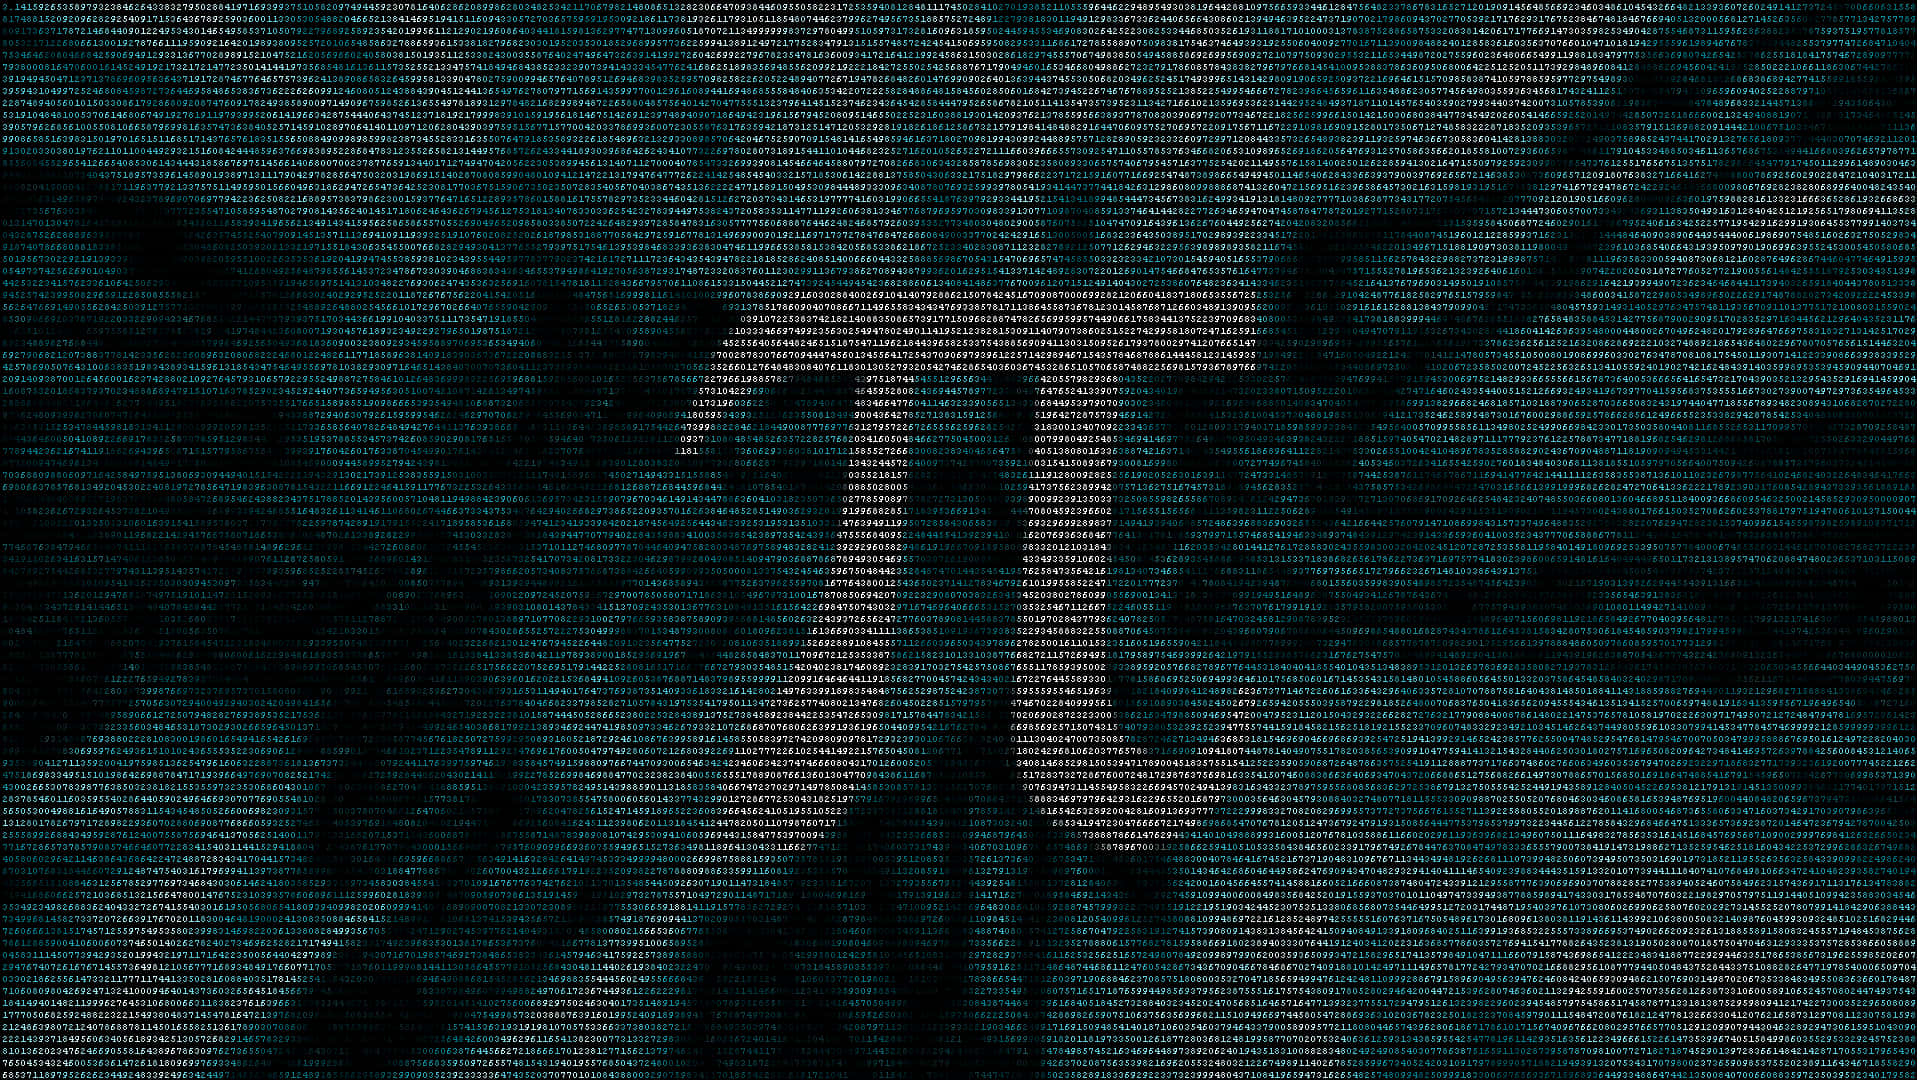 Pi - A Black And White Image Of The Pi Symbol Wallpaper